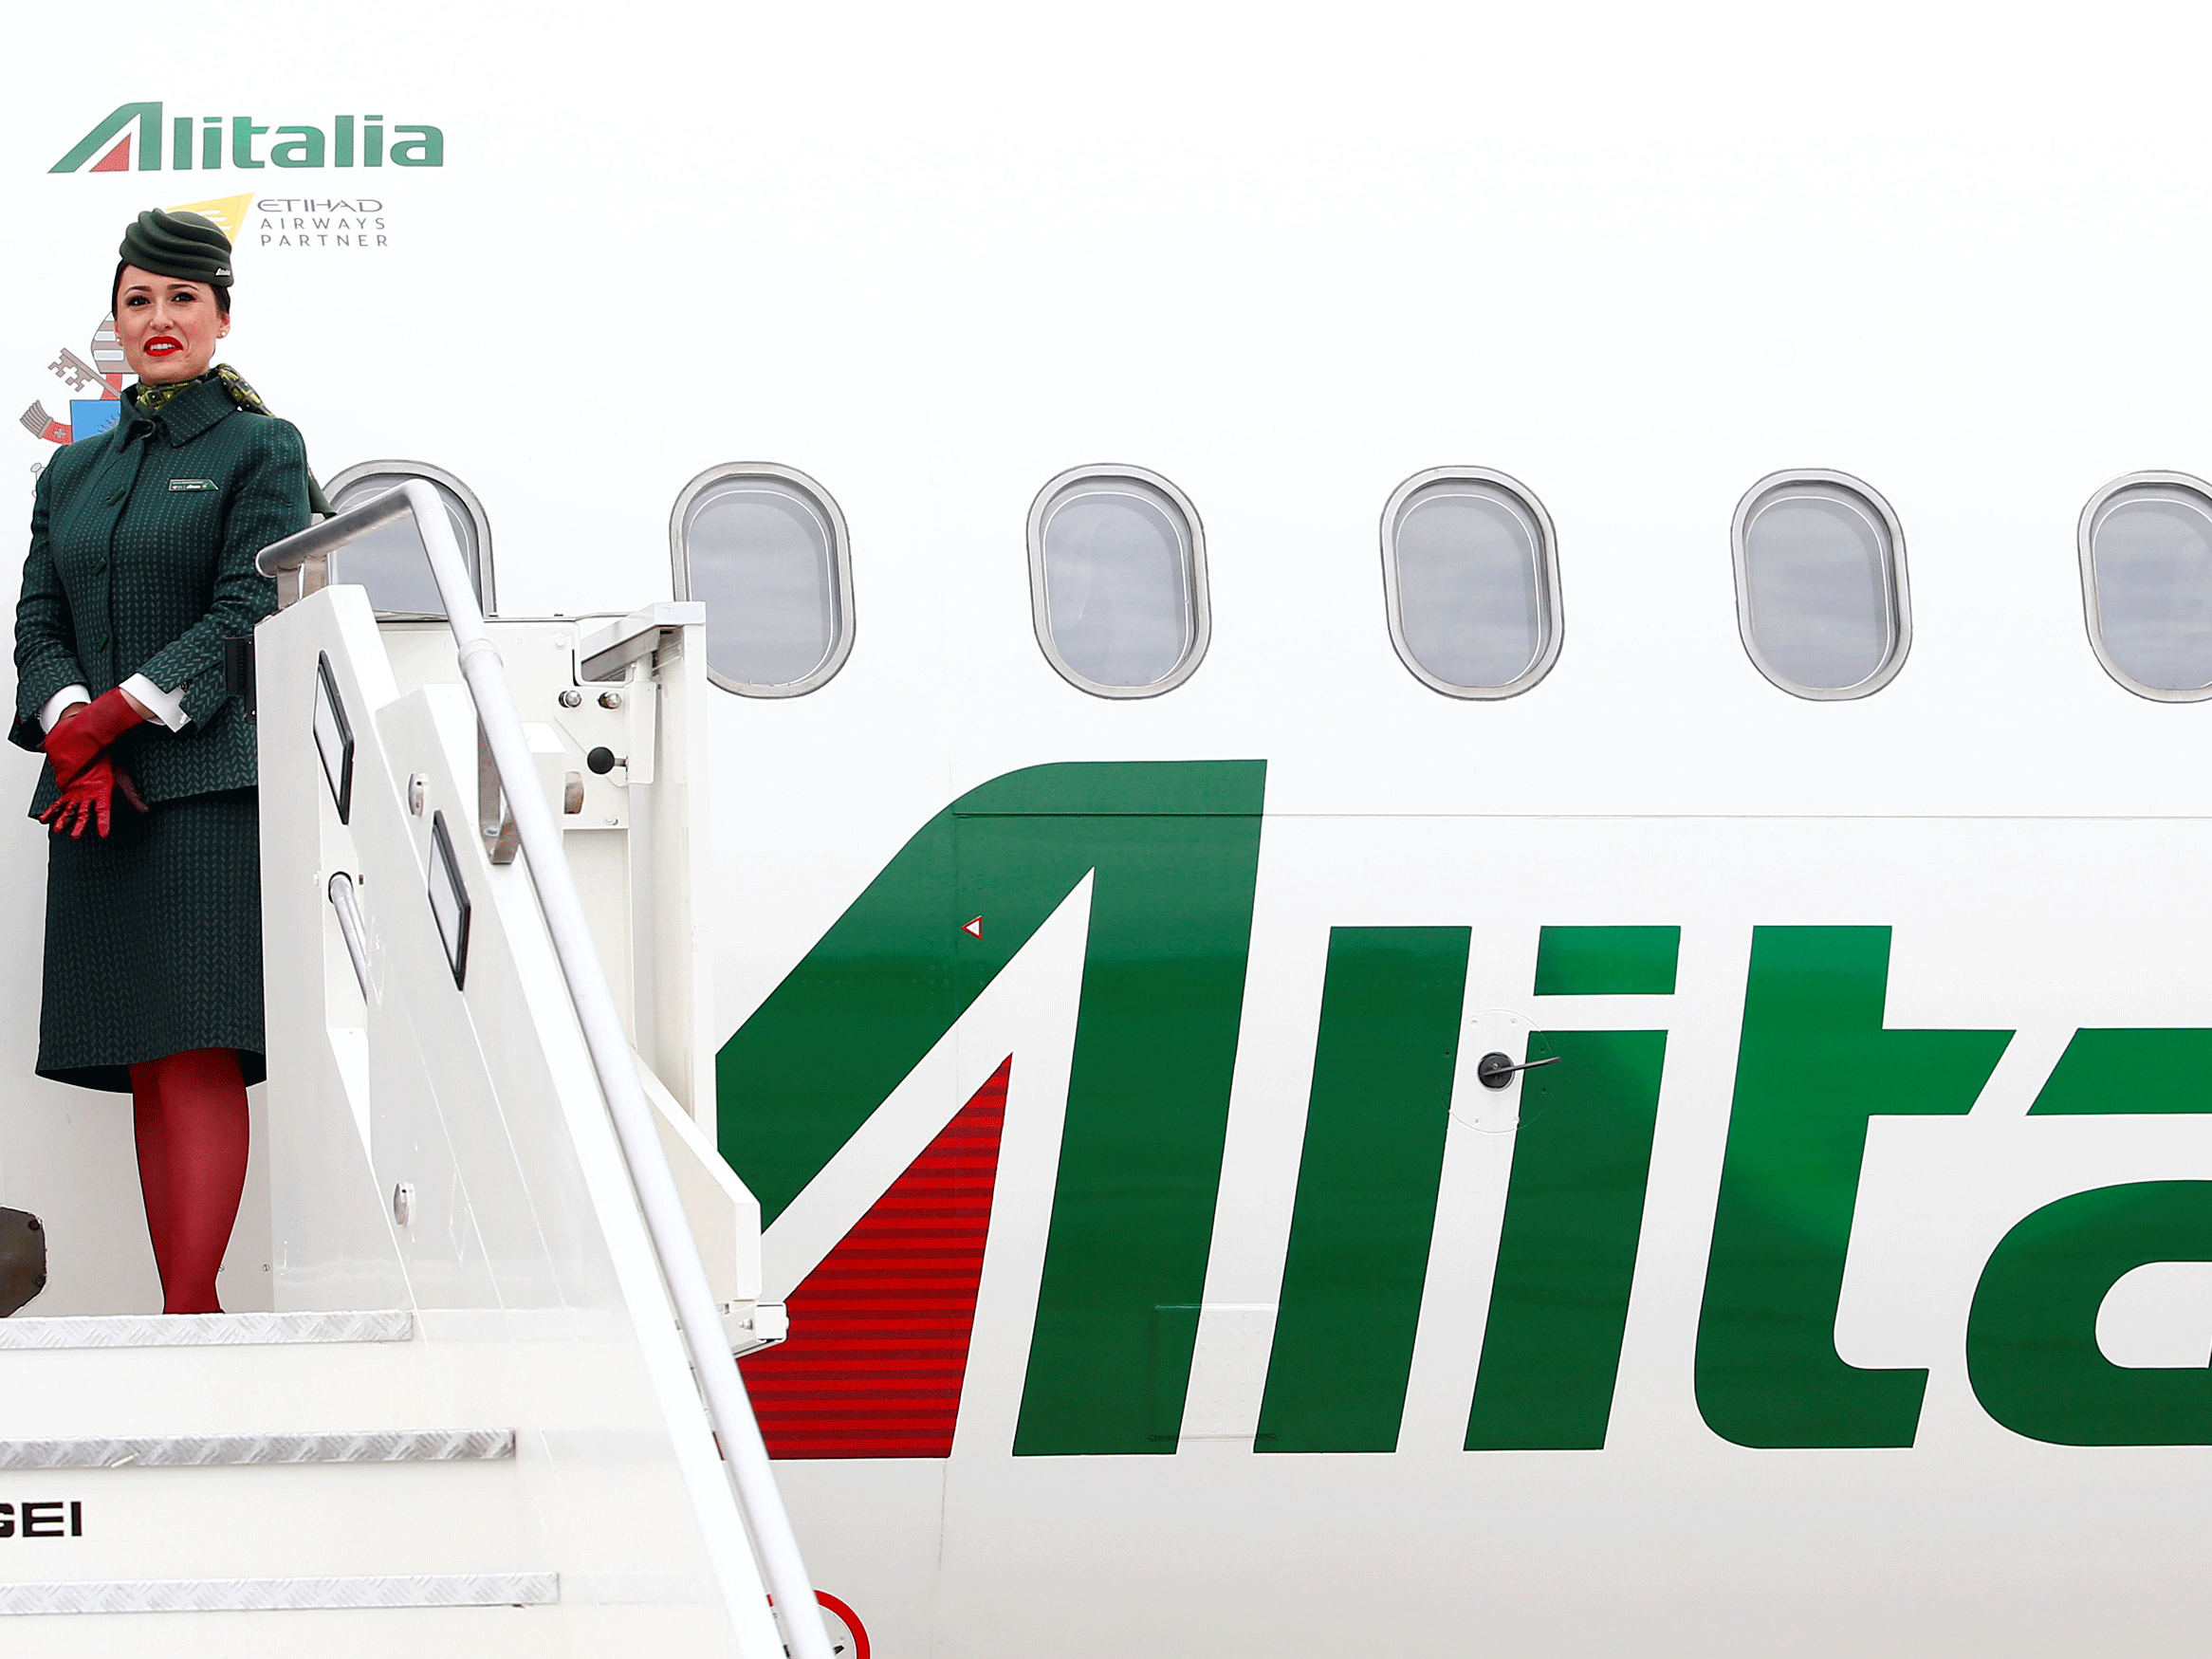 Alitalia to file for administration as turnaround plan fails